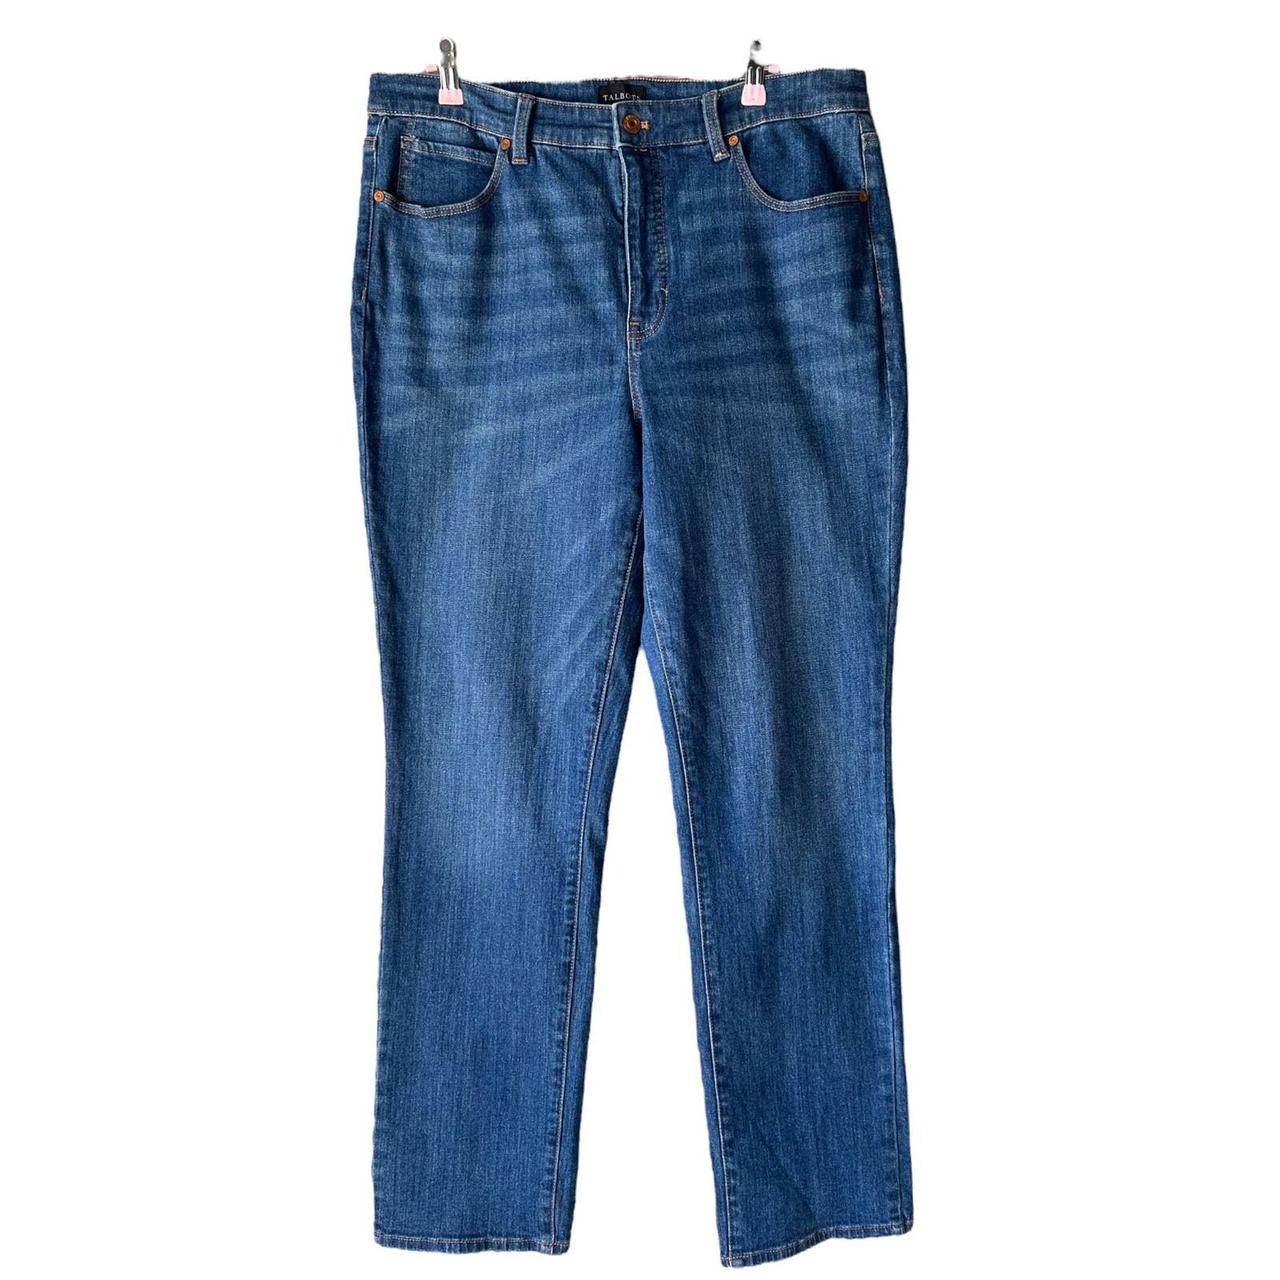 Straight Leg Jeans - Amagansett Wash